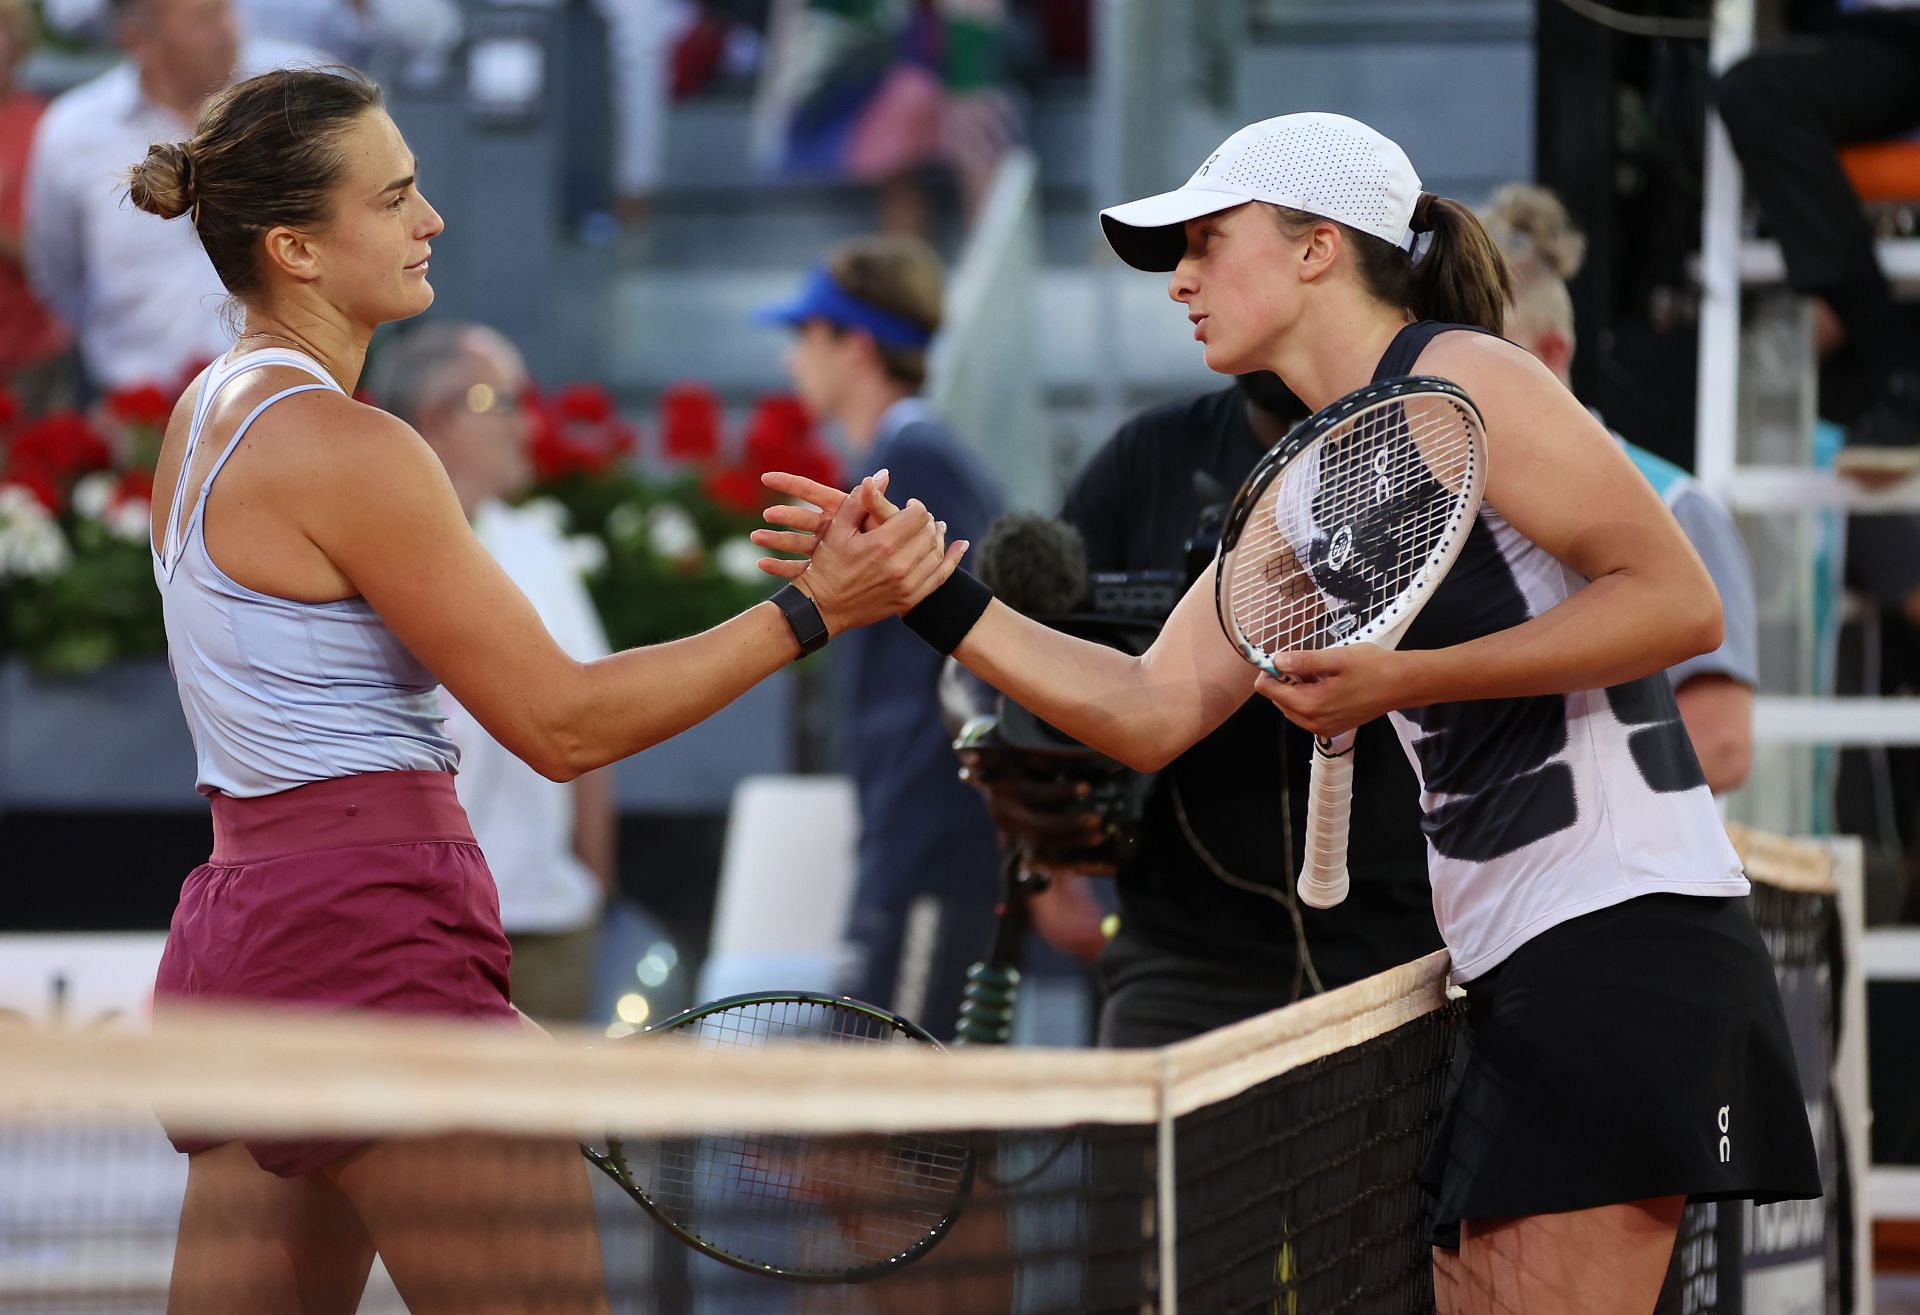 Aryna Sabalenka and Iga Swiatek interact on the tennis court